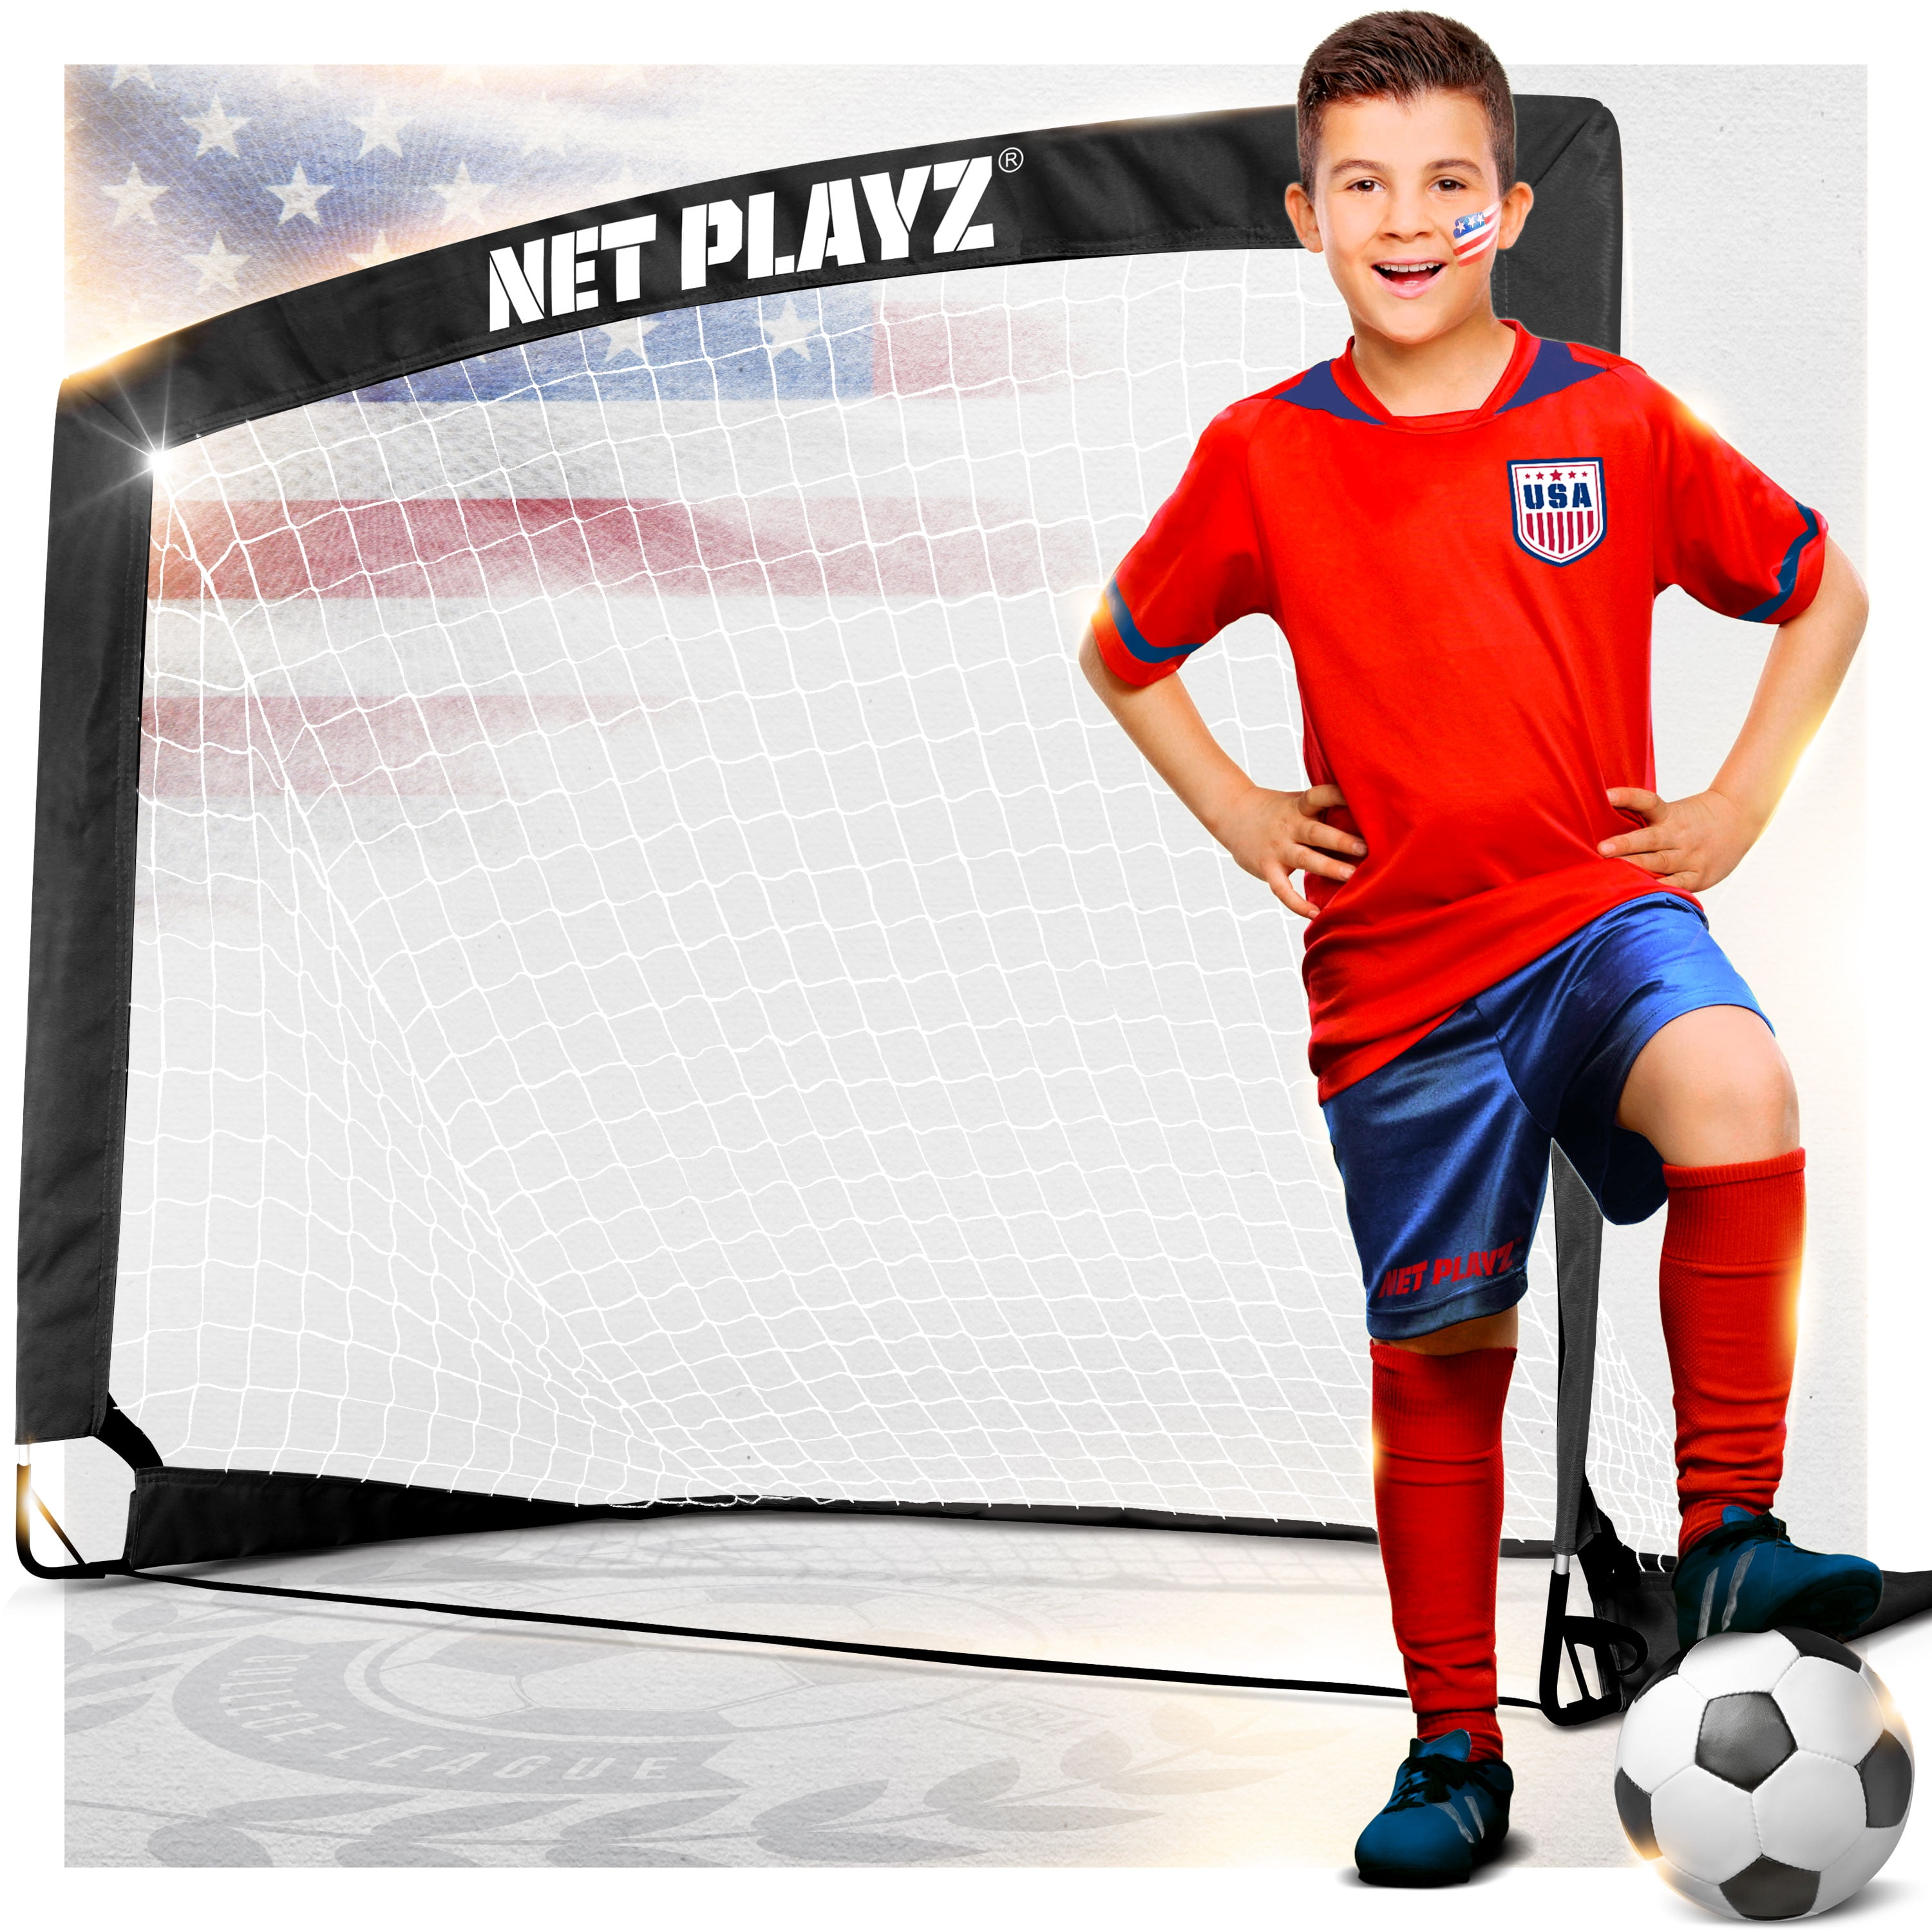 NET PLAYZ 4ftx3ft Easy Fold-Up Portable Training Soccer Goal Sports Set of 2 